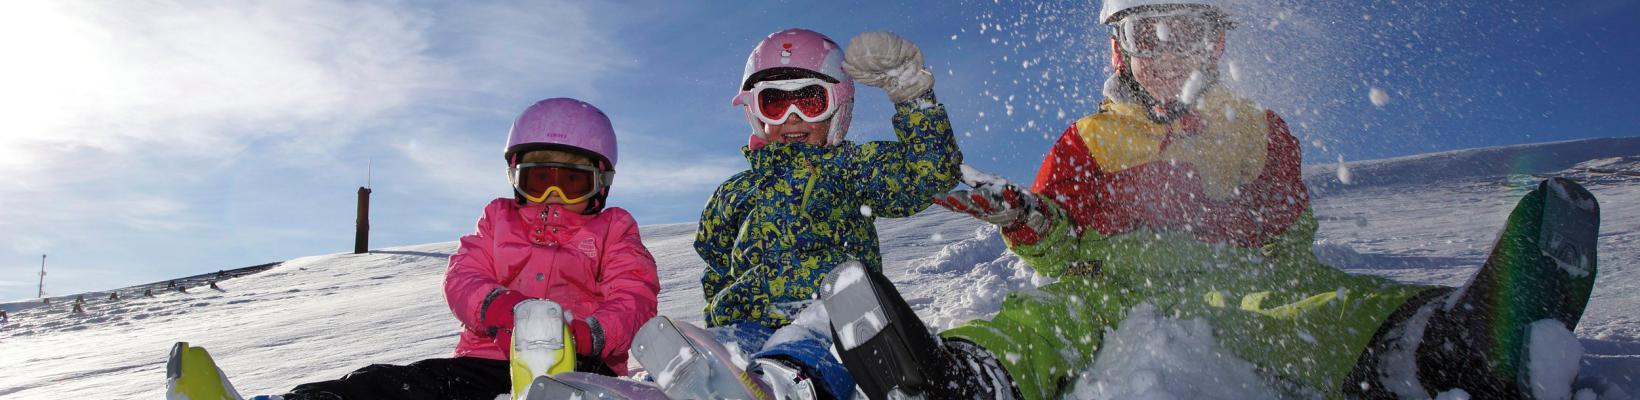 Kinder im Schnee im Skiurlaub